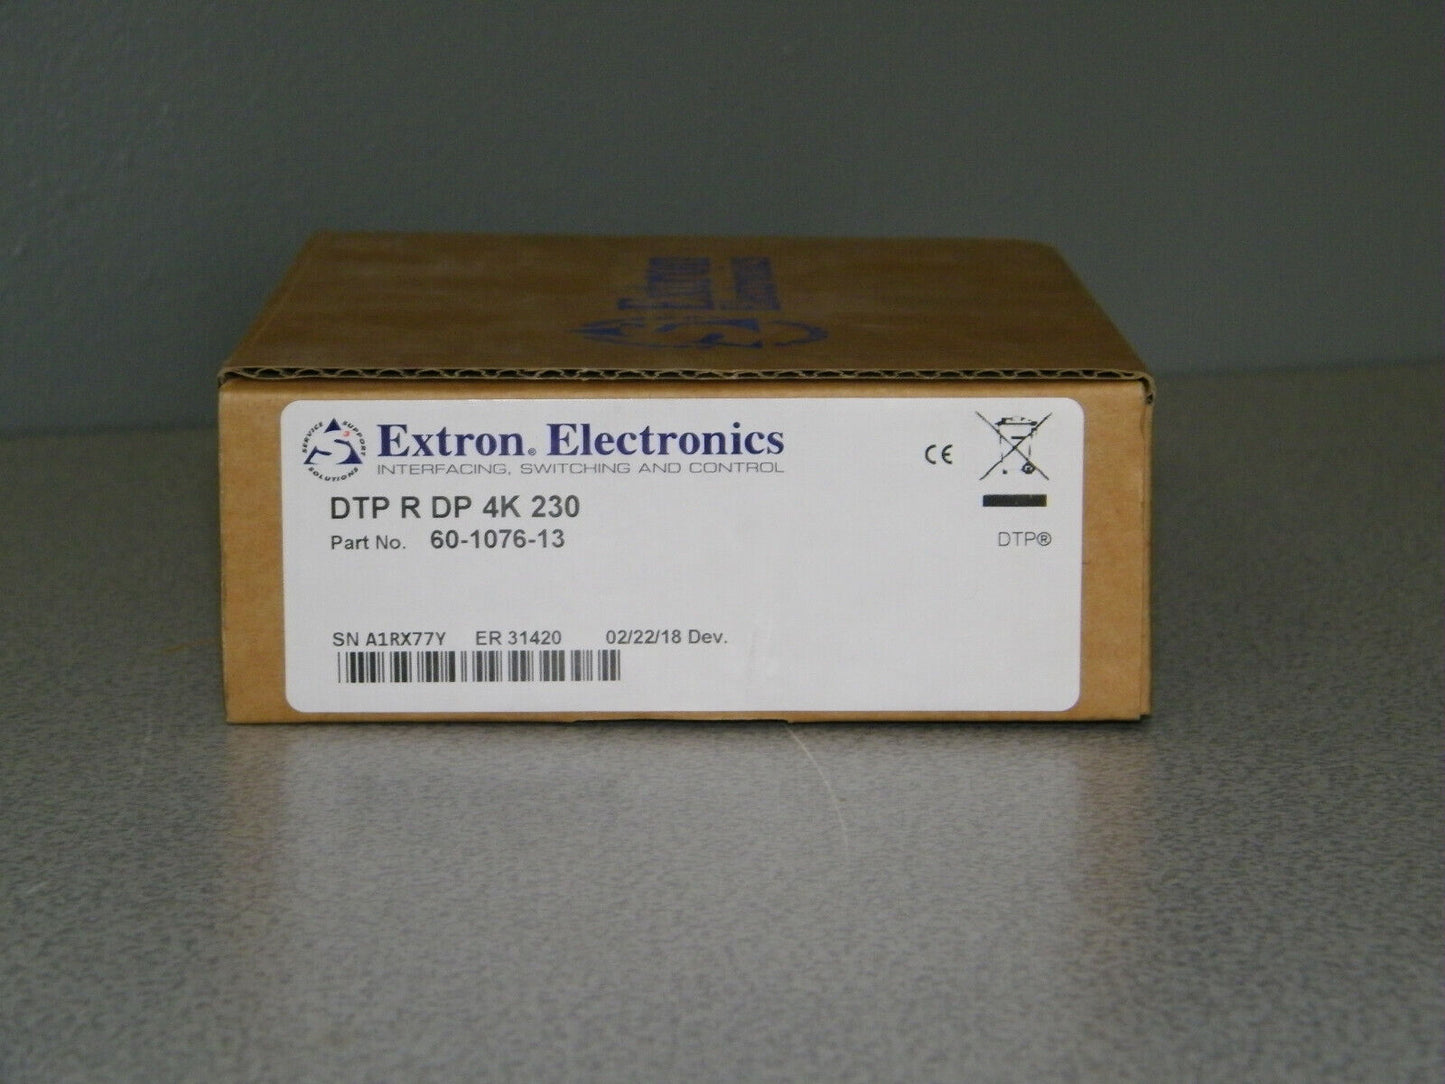 Extron DTP R DP 4K 230 / 60-1076-13